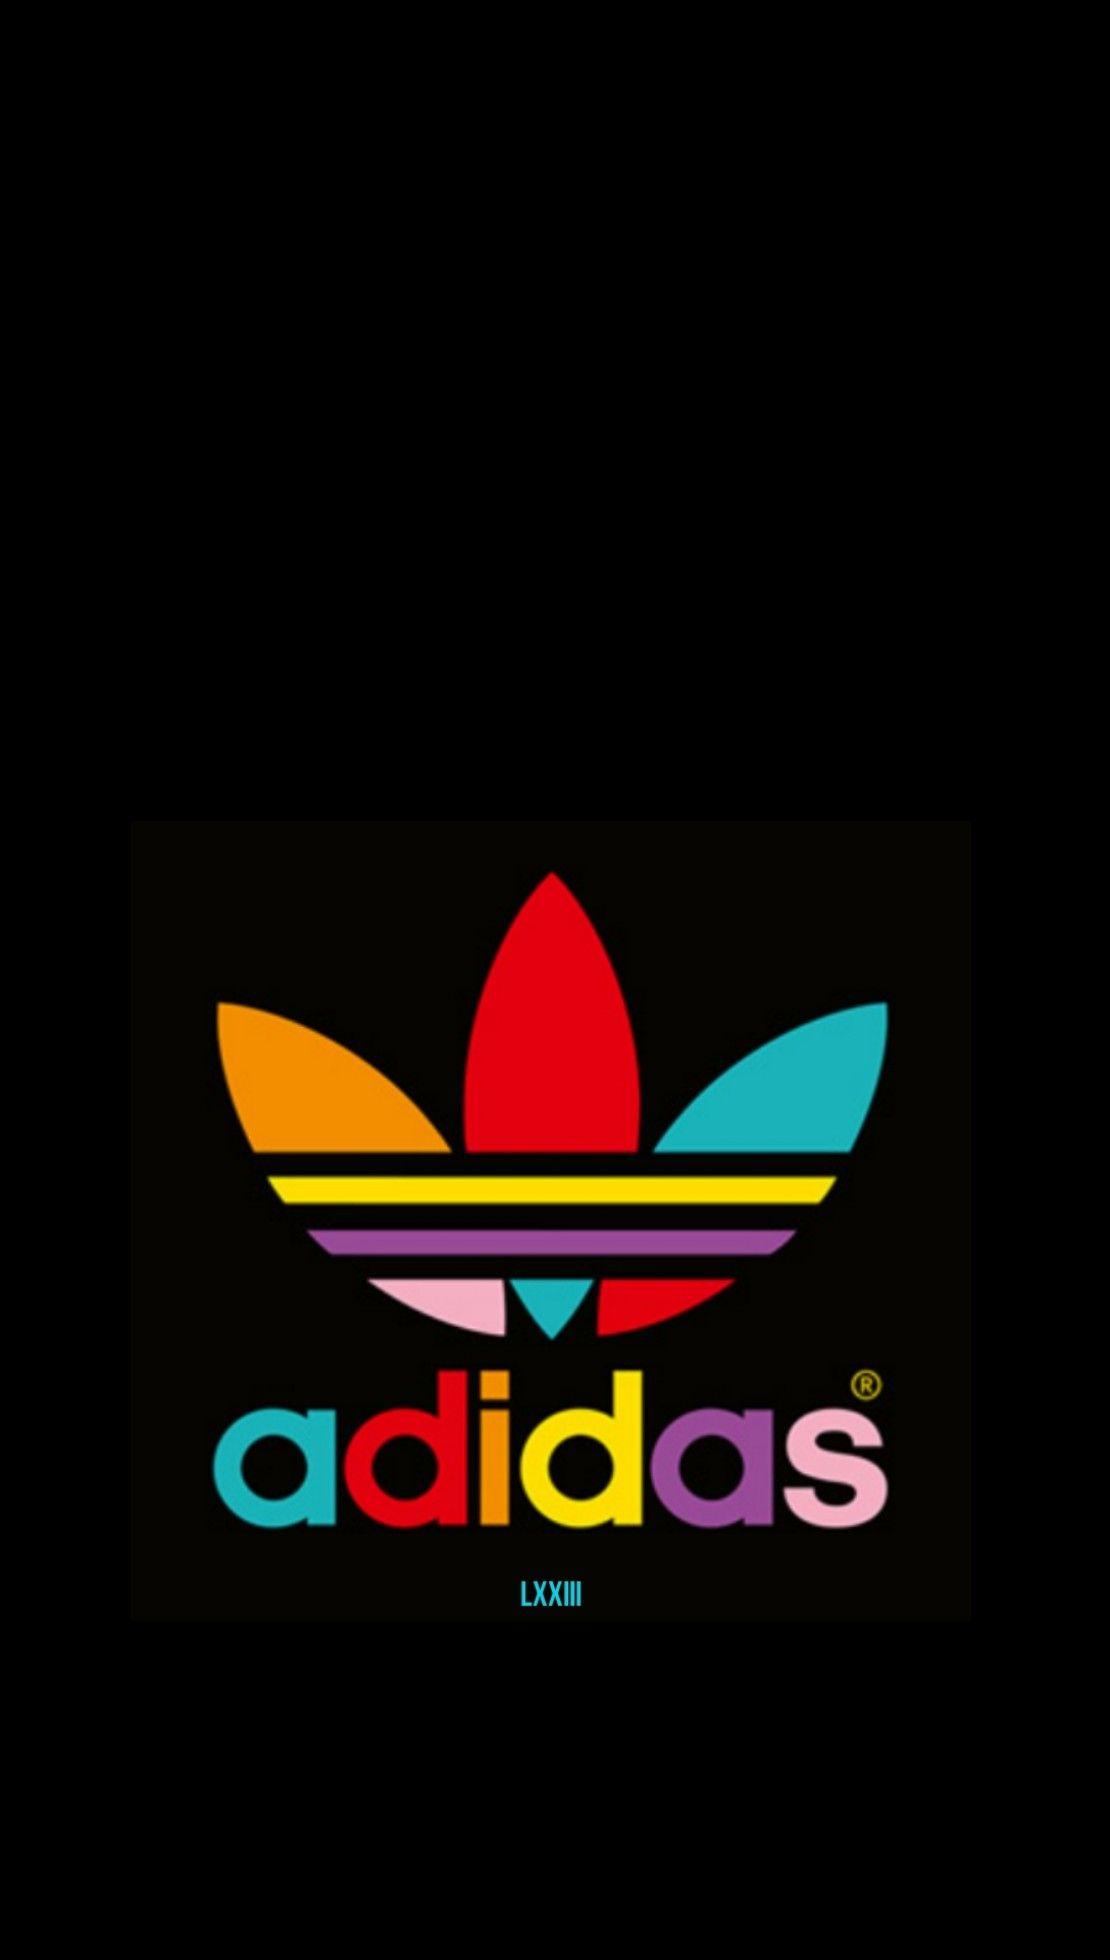 Colorful Adidas Logo - Colorful Adidas on Black Wallpaper. *Black Wallpaper. iPhone